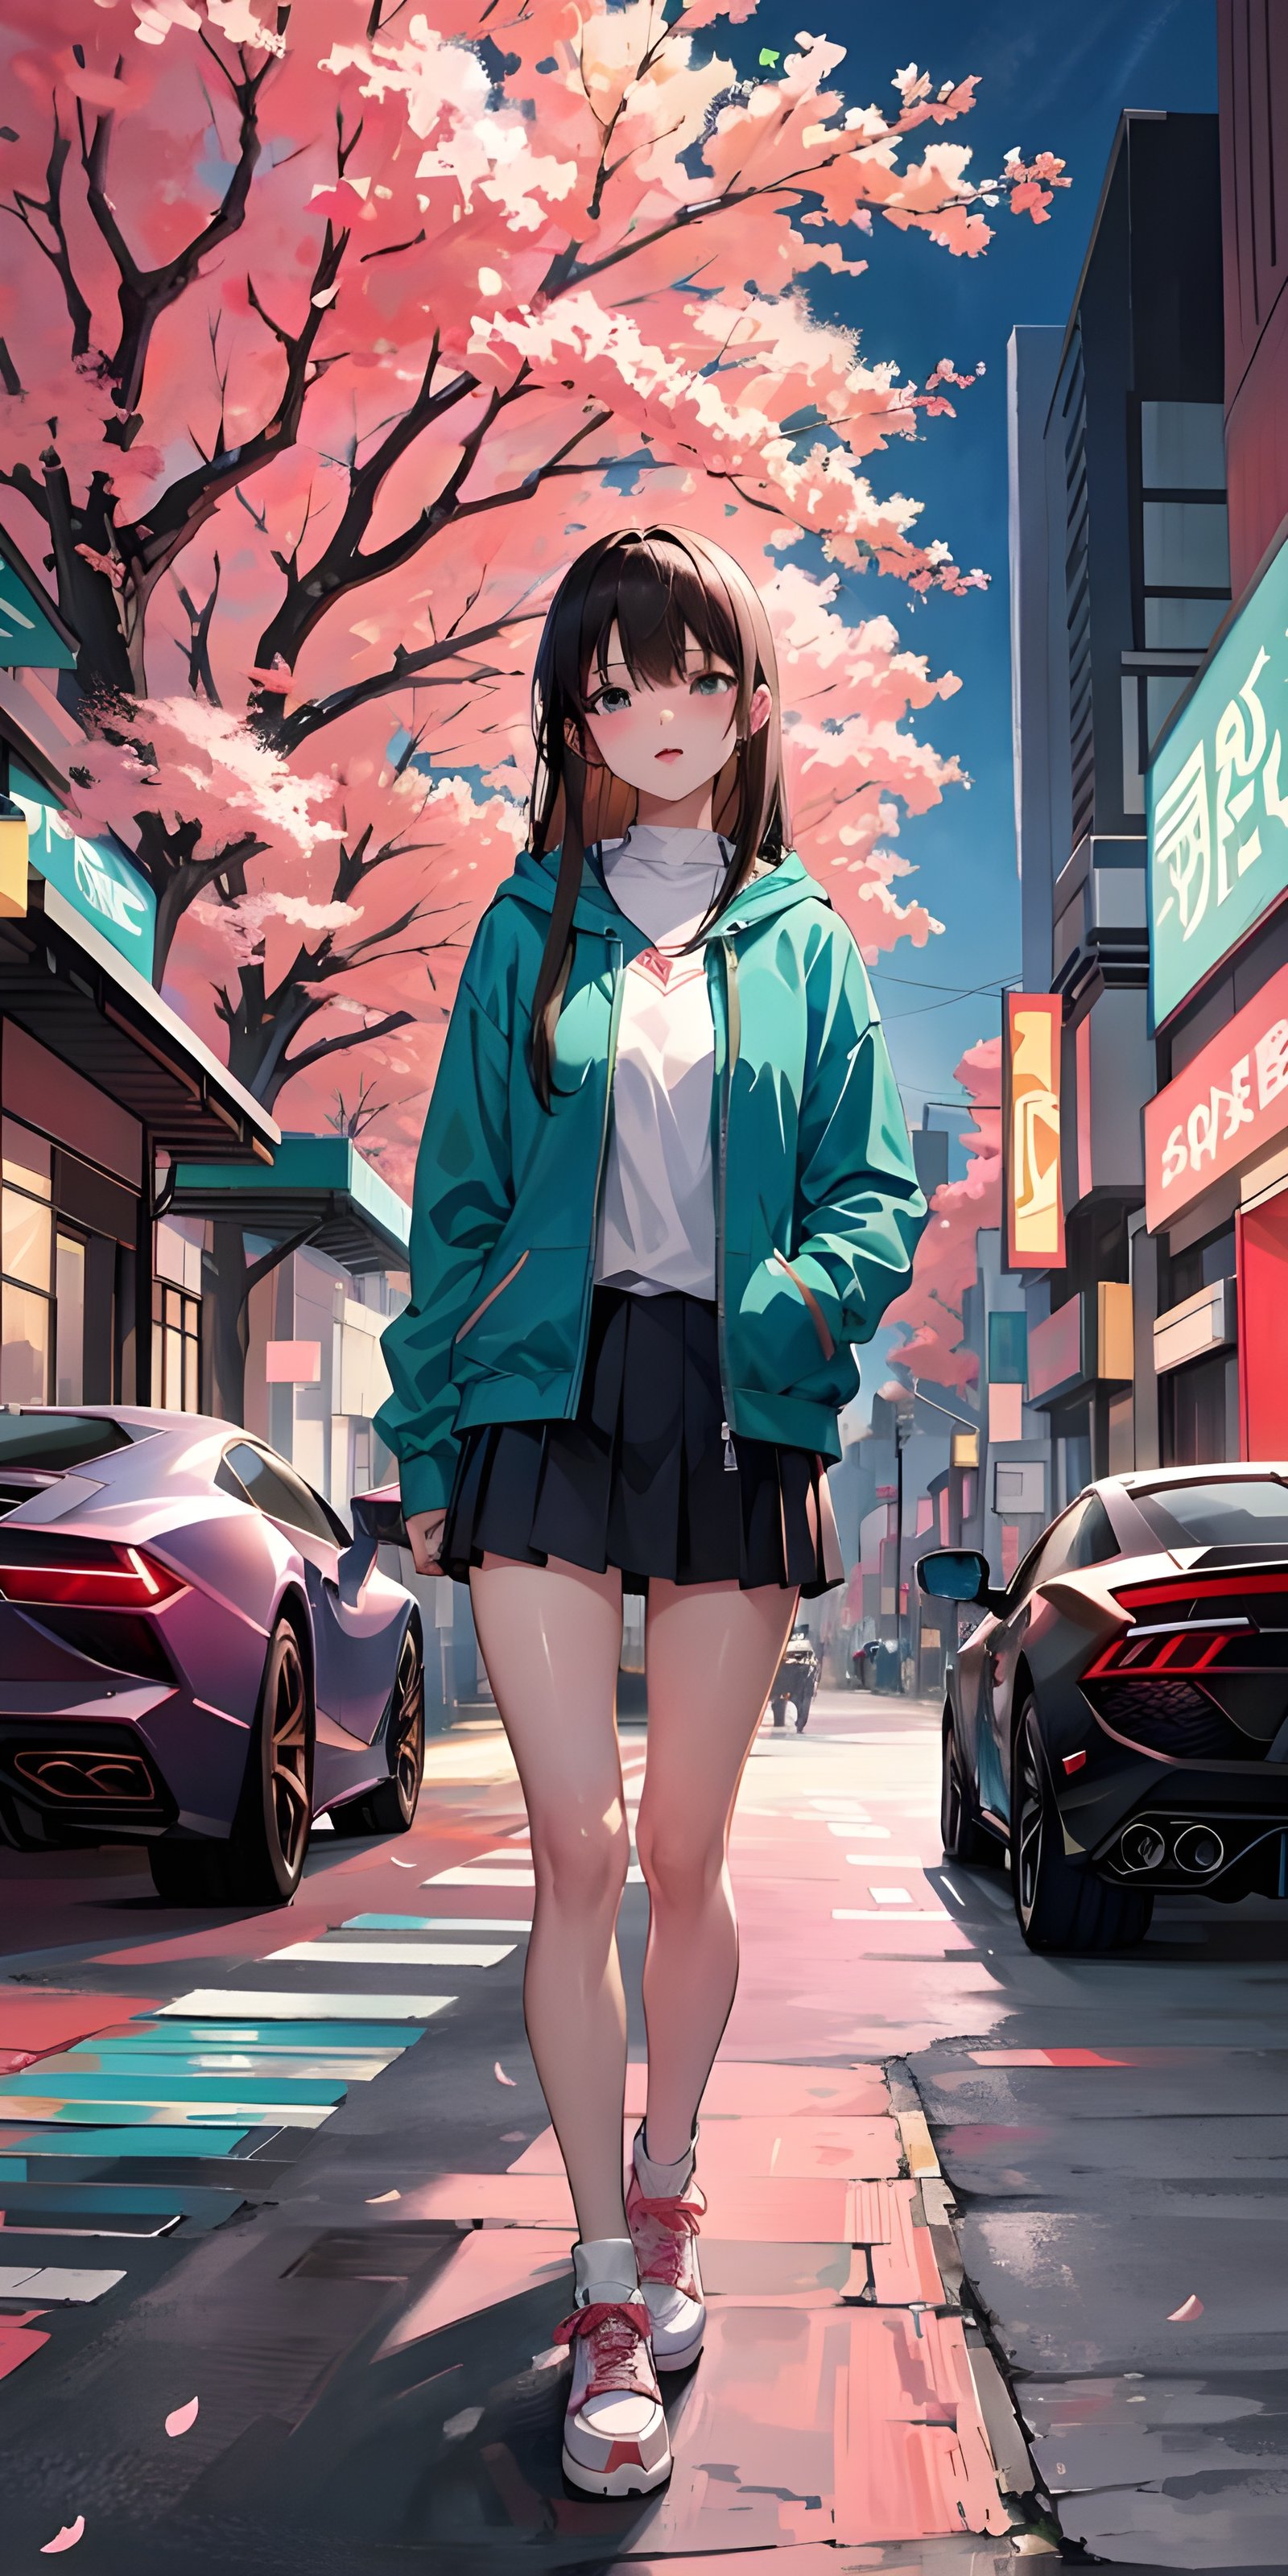 Cool Stylish Anime Girl Wallpaper Image